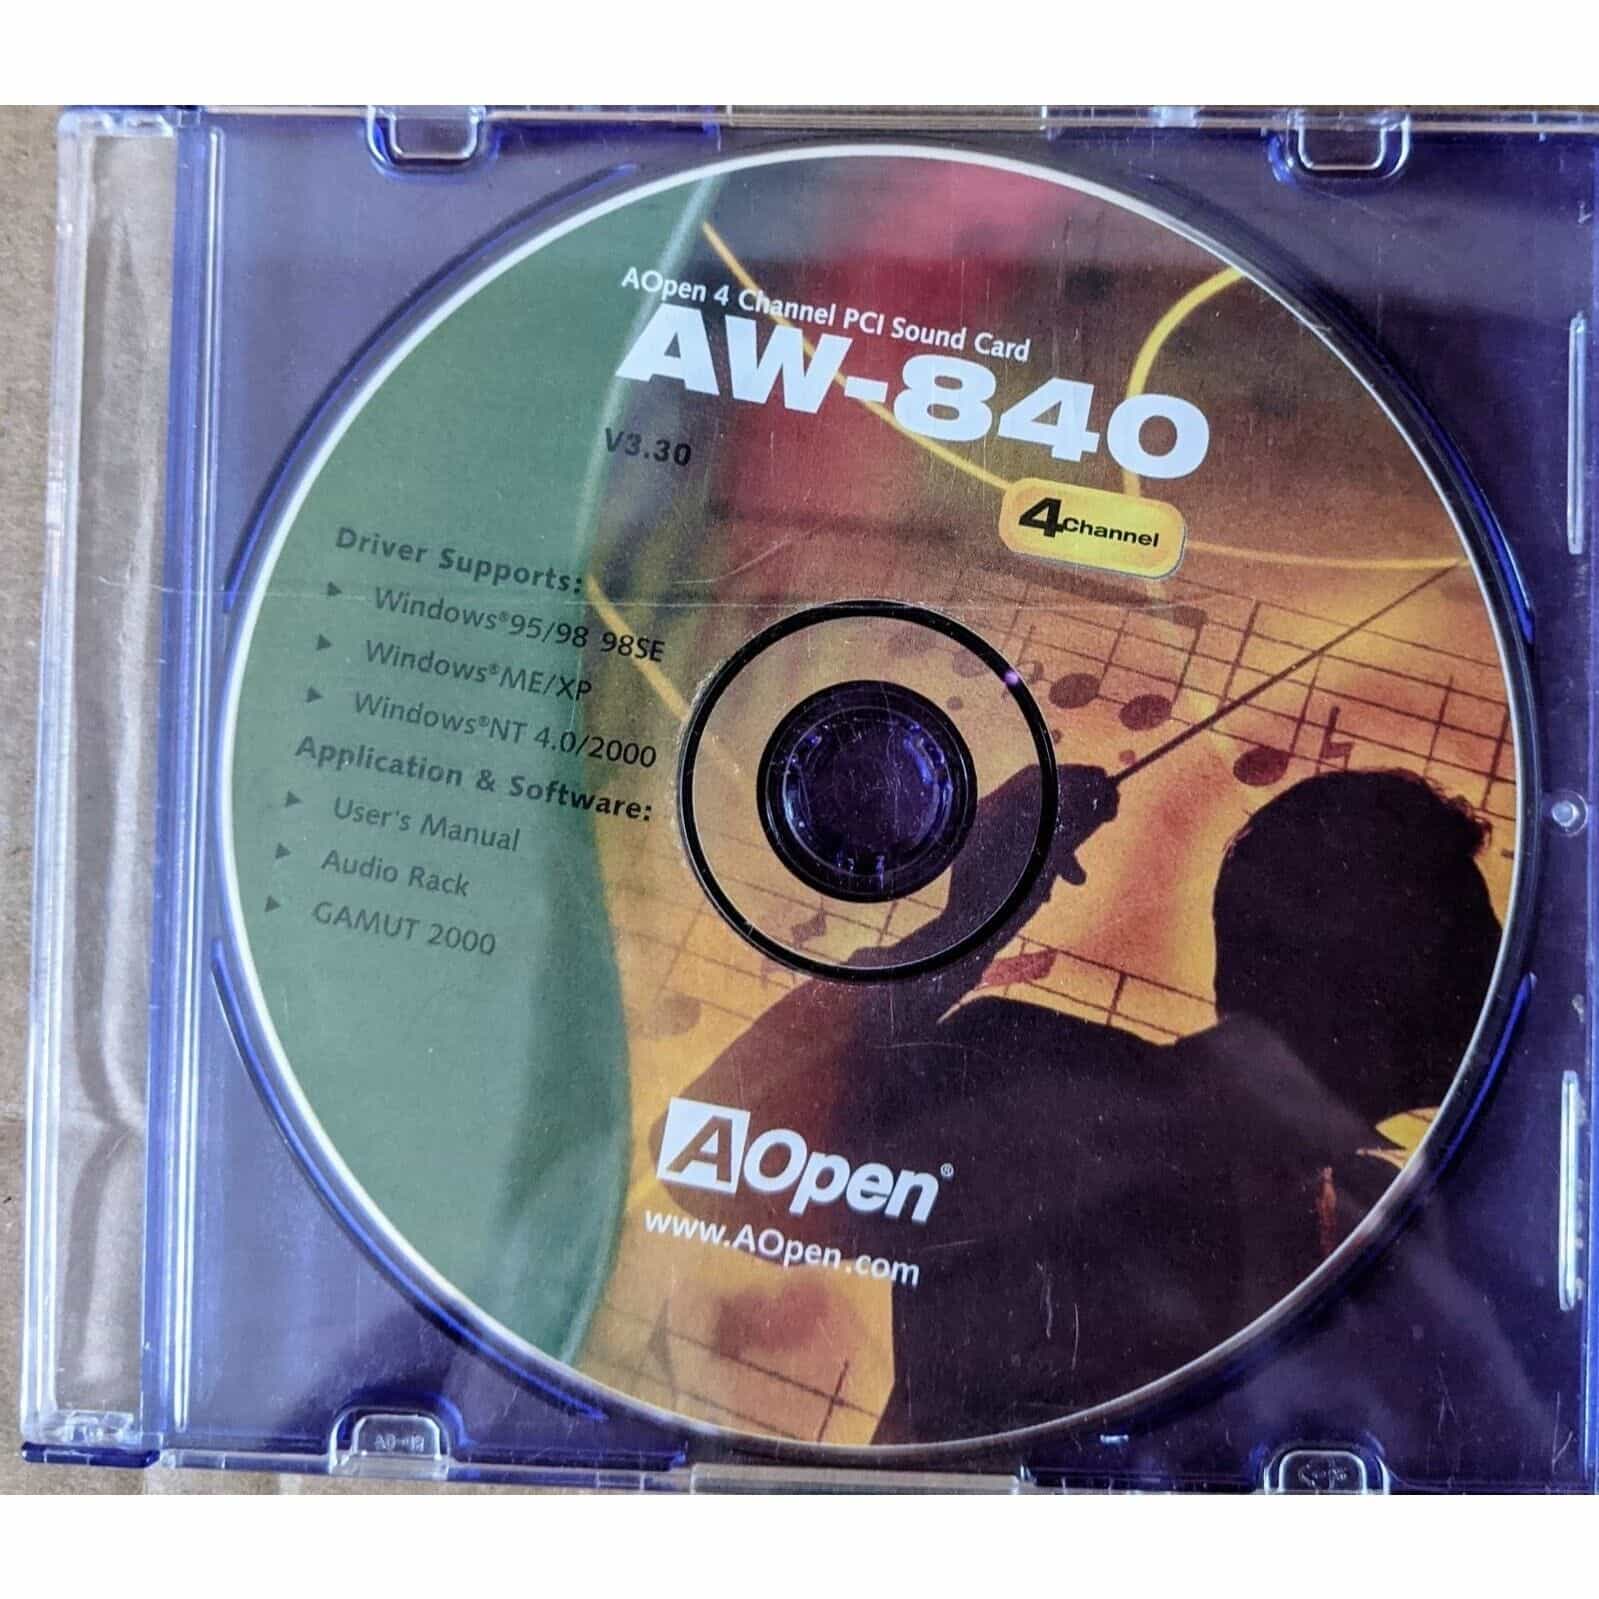 AOpen PCI Sound Card Driver CD AW-840